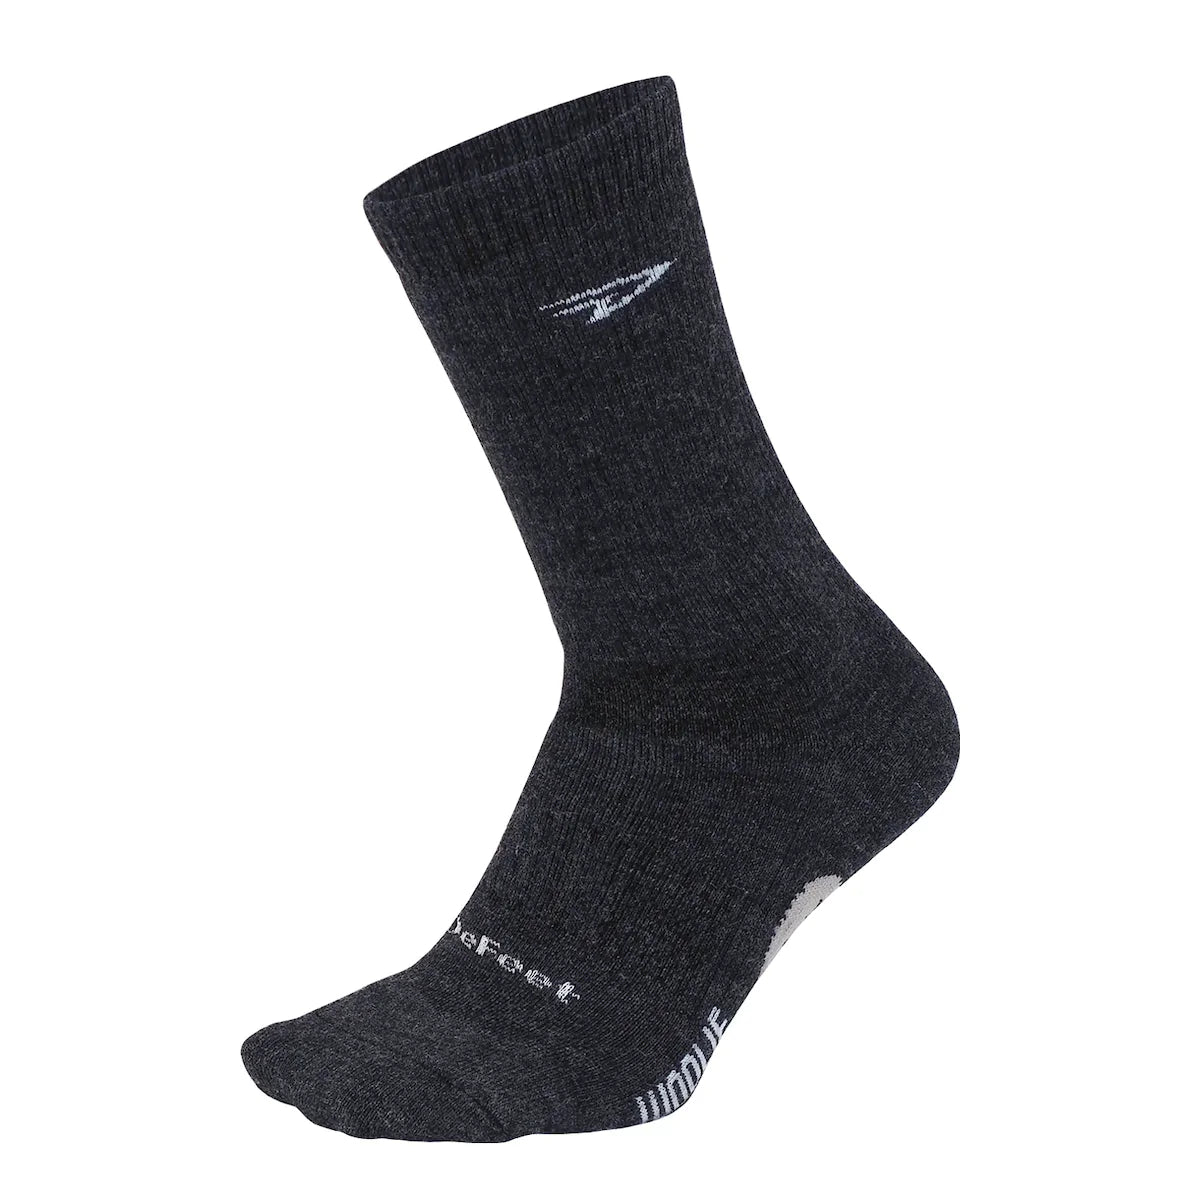 dark charcoal black 6" Merino wool Woolie Boolie cycling sock with a white cuff d-logo